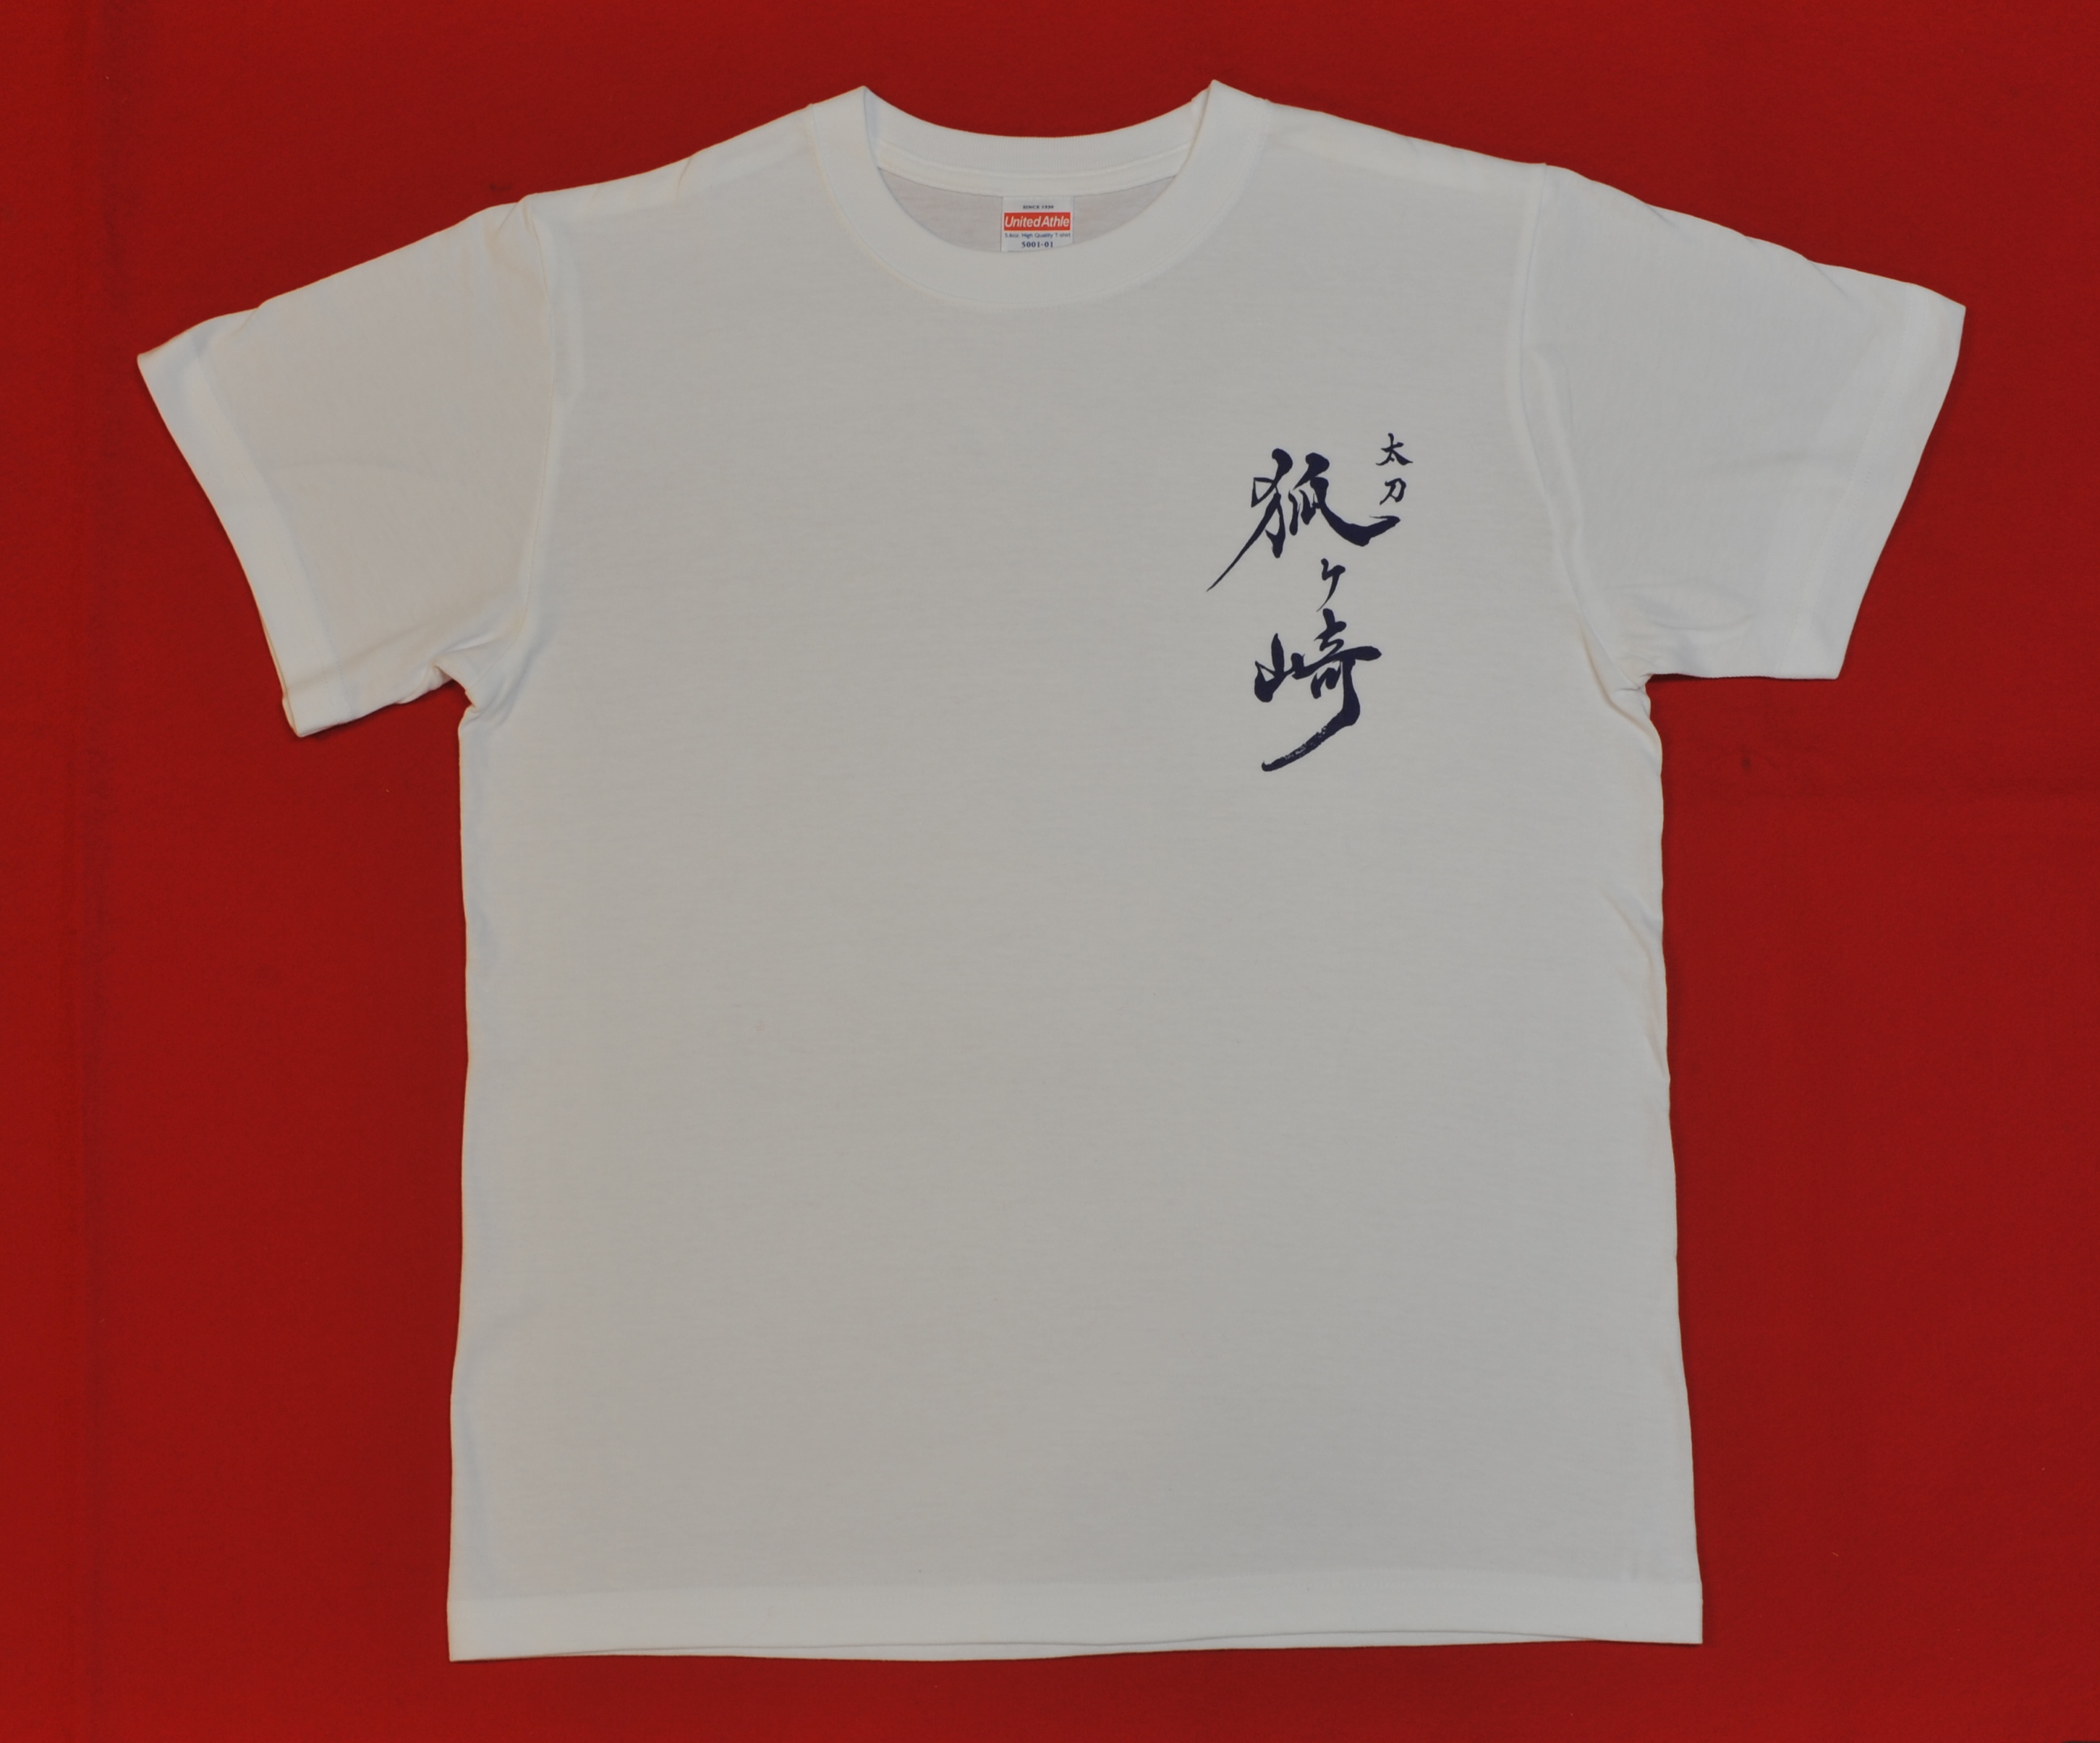 Tシャツ Lサイズ 白 「太刀 狐ヶ崎」ロゴ入り ホワイト L